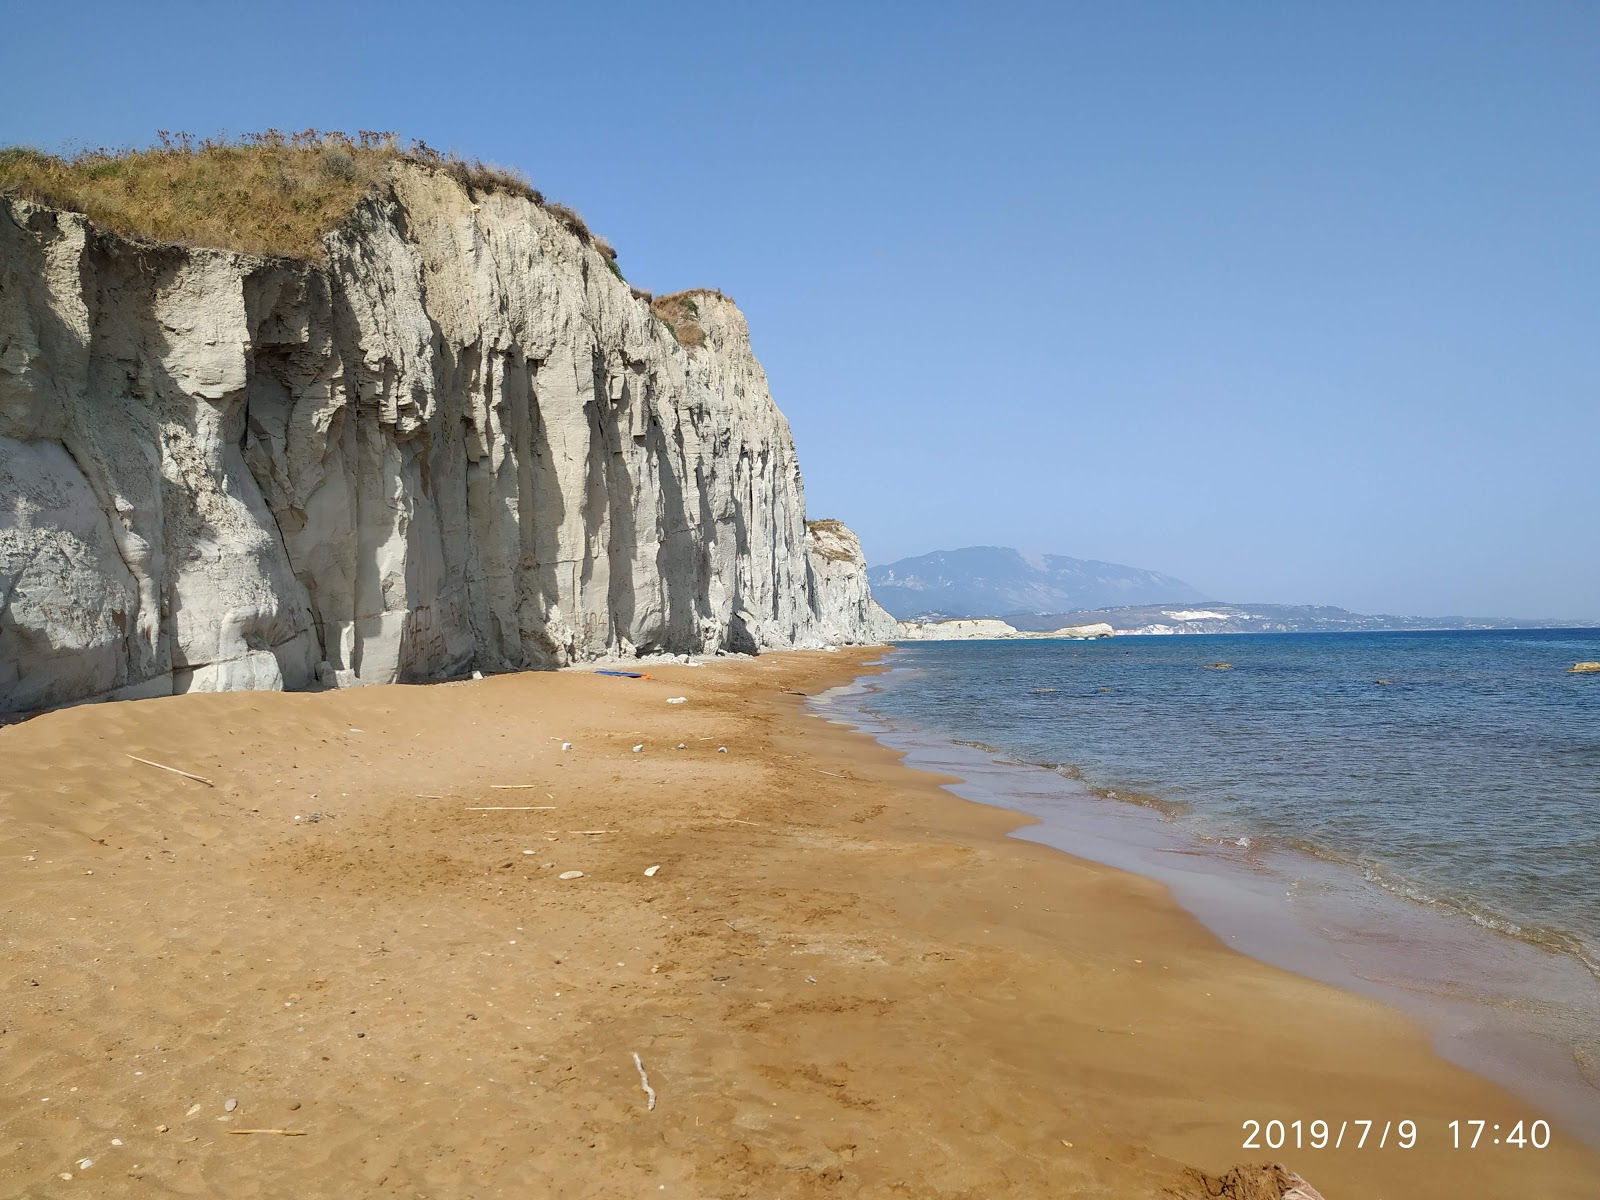 Foto di Mania beach ubicato in zona naturale